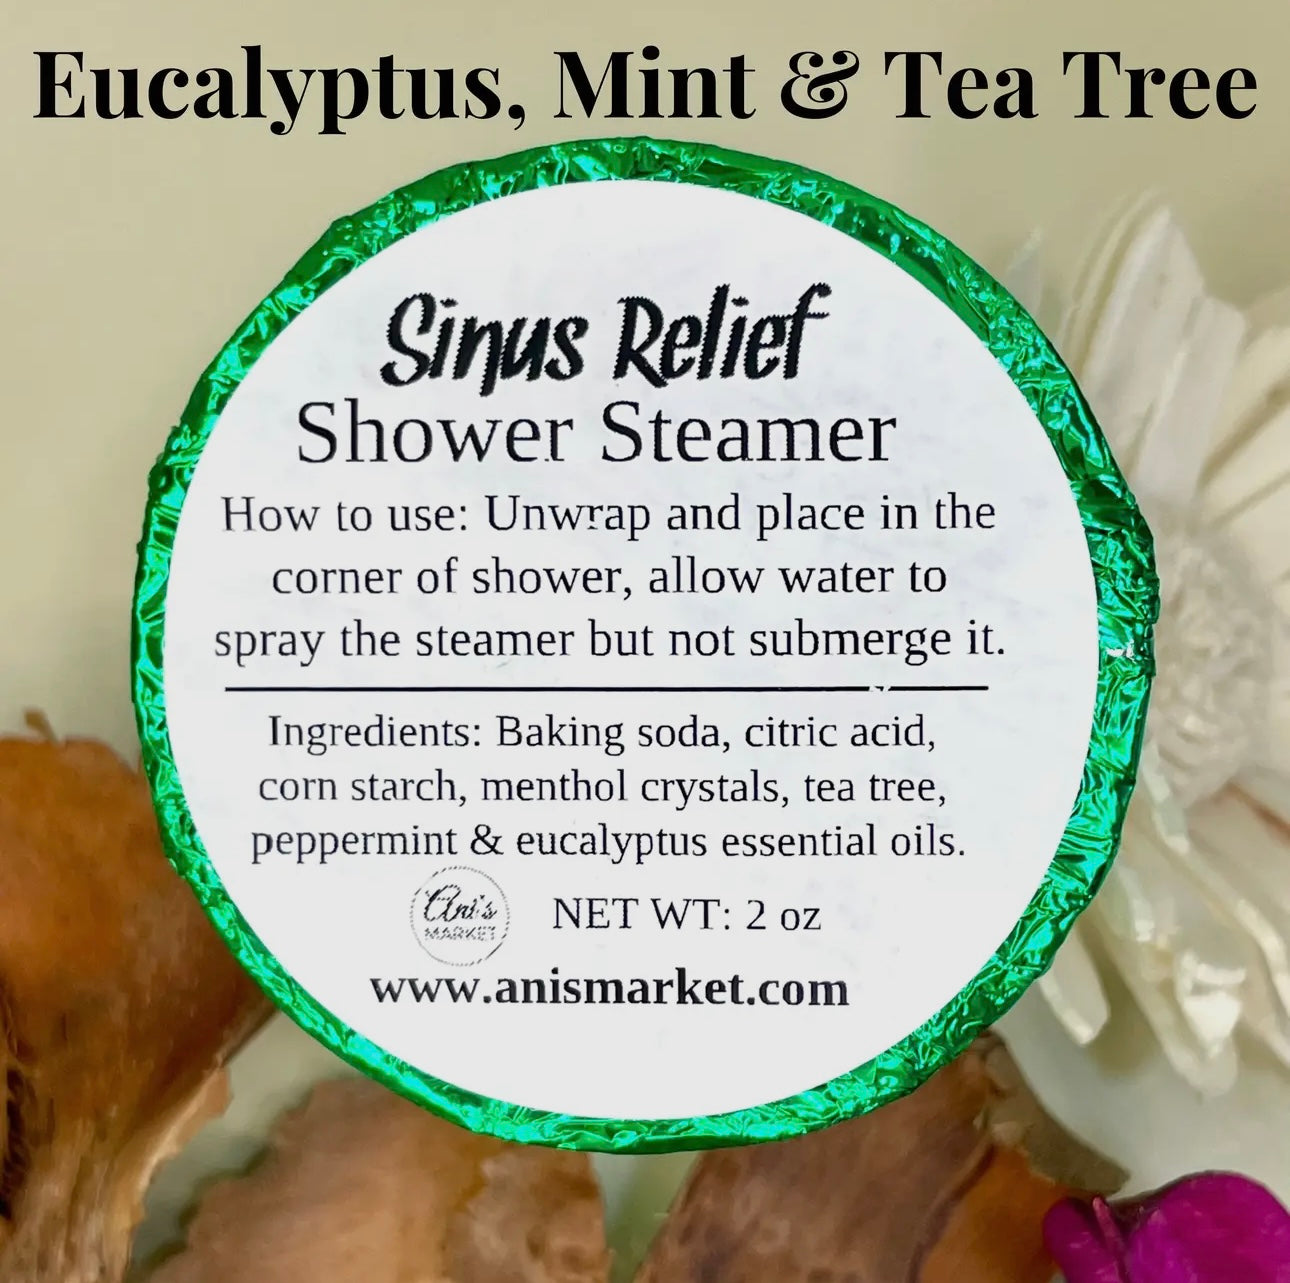 Eucalyptus mint and tea tree shower steamer